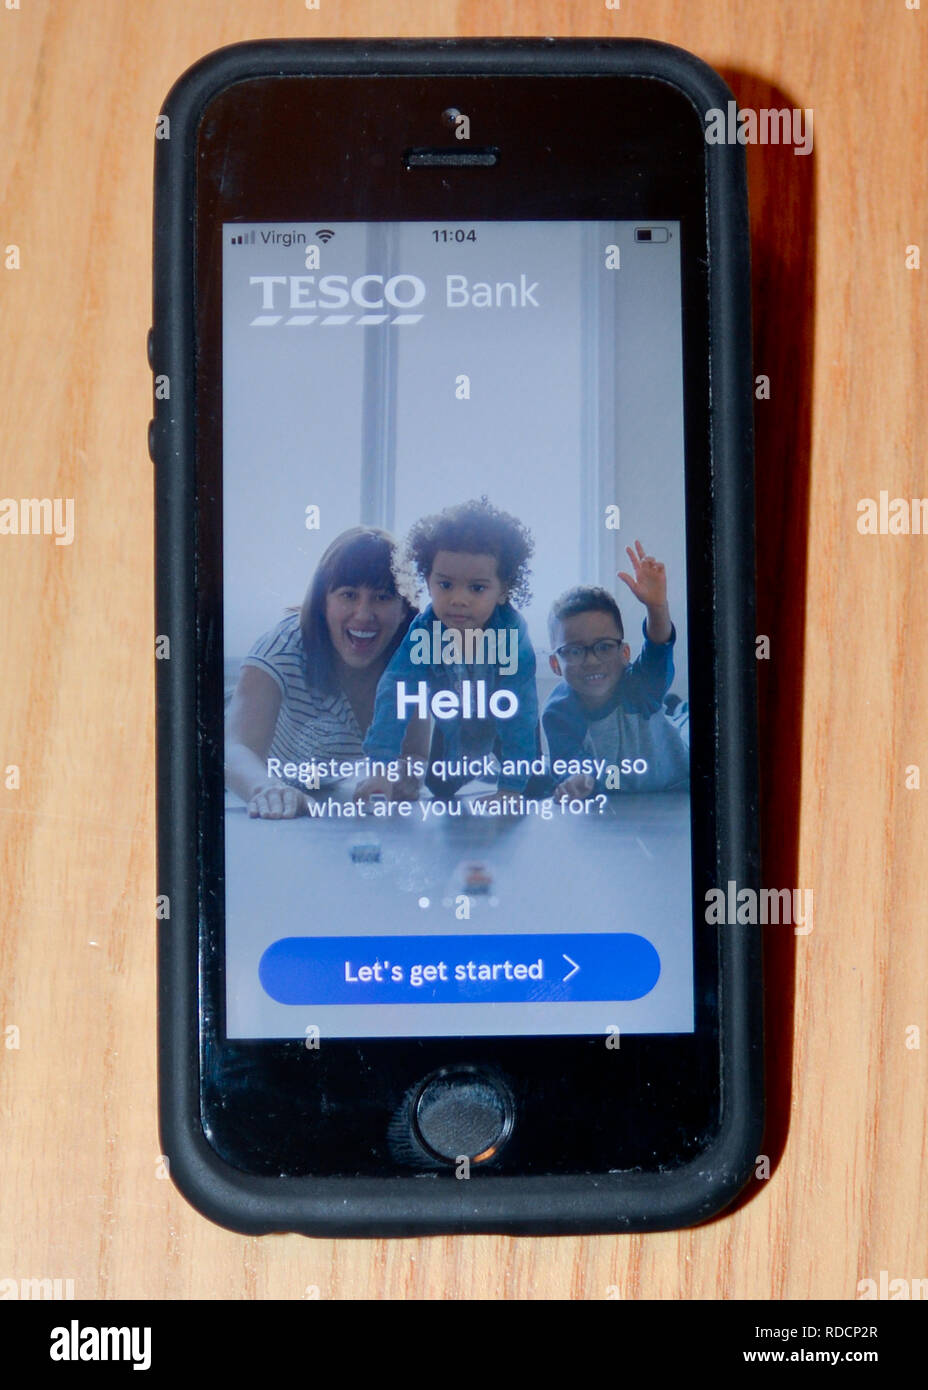 Tesco bank application on smart phone Stock Photo